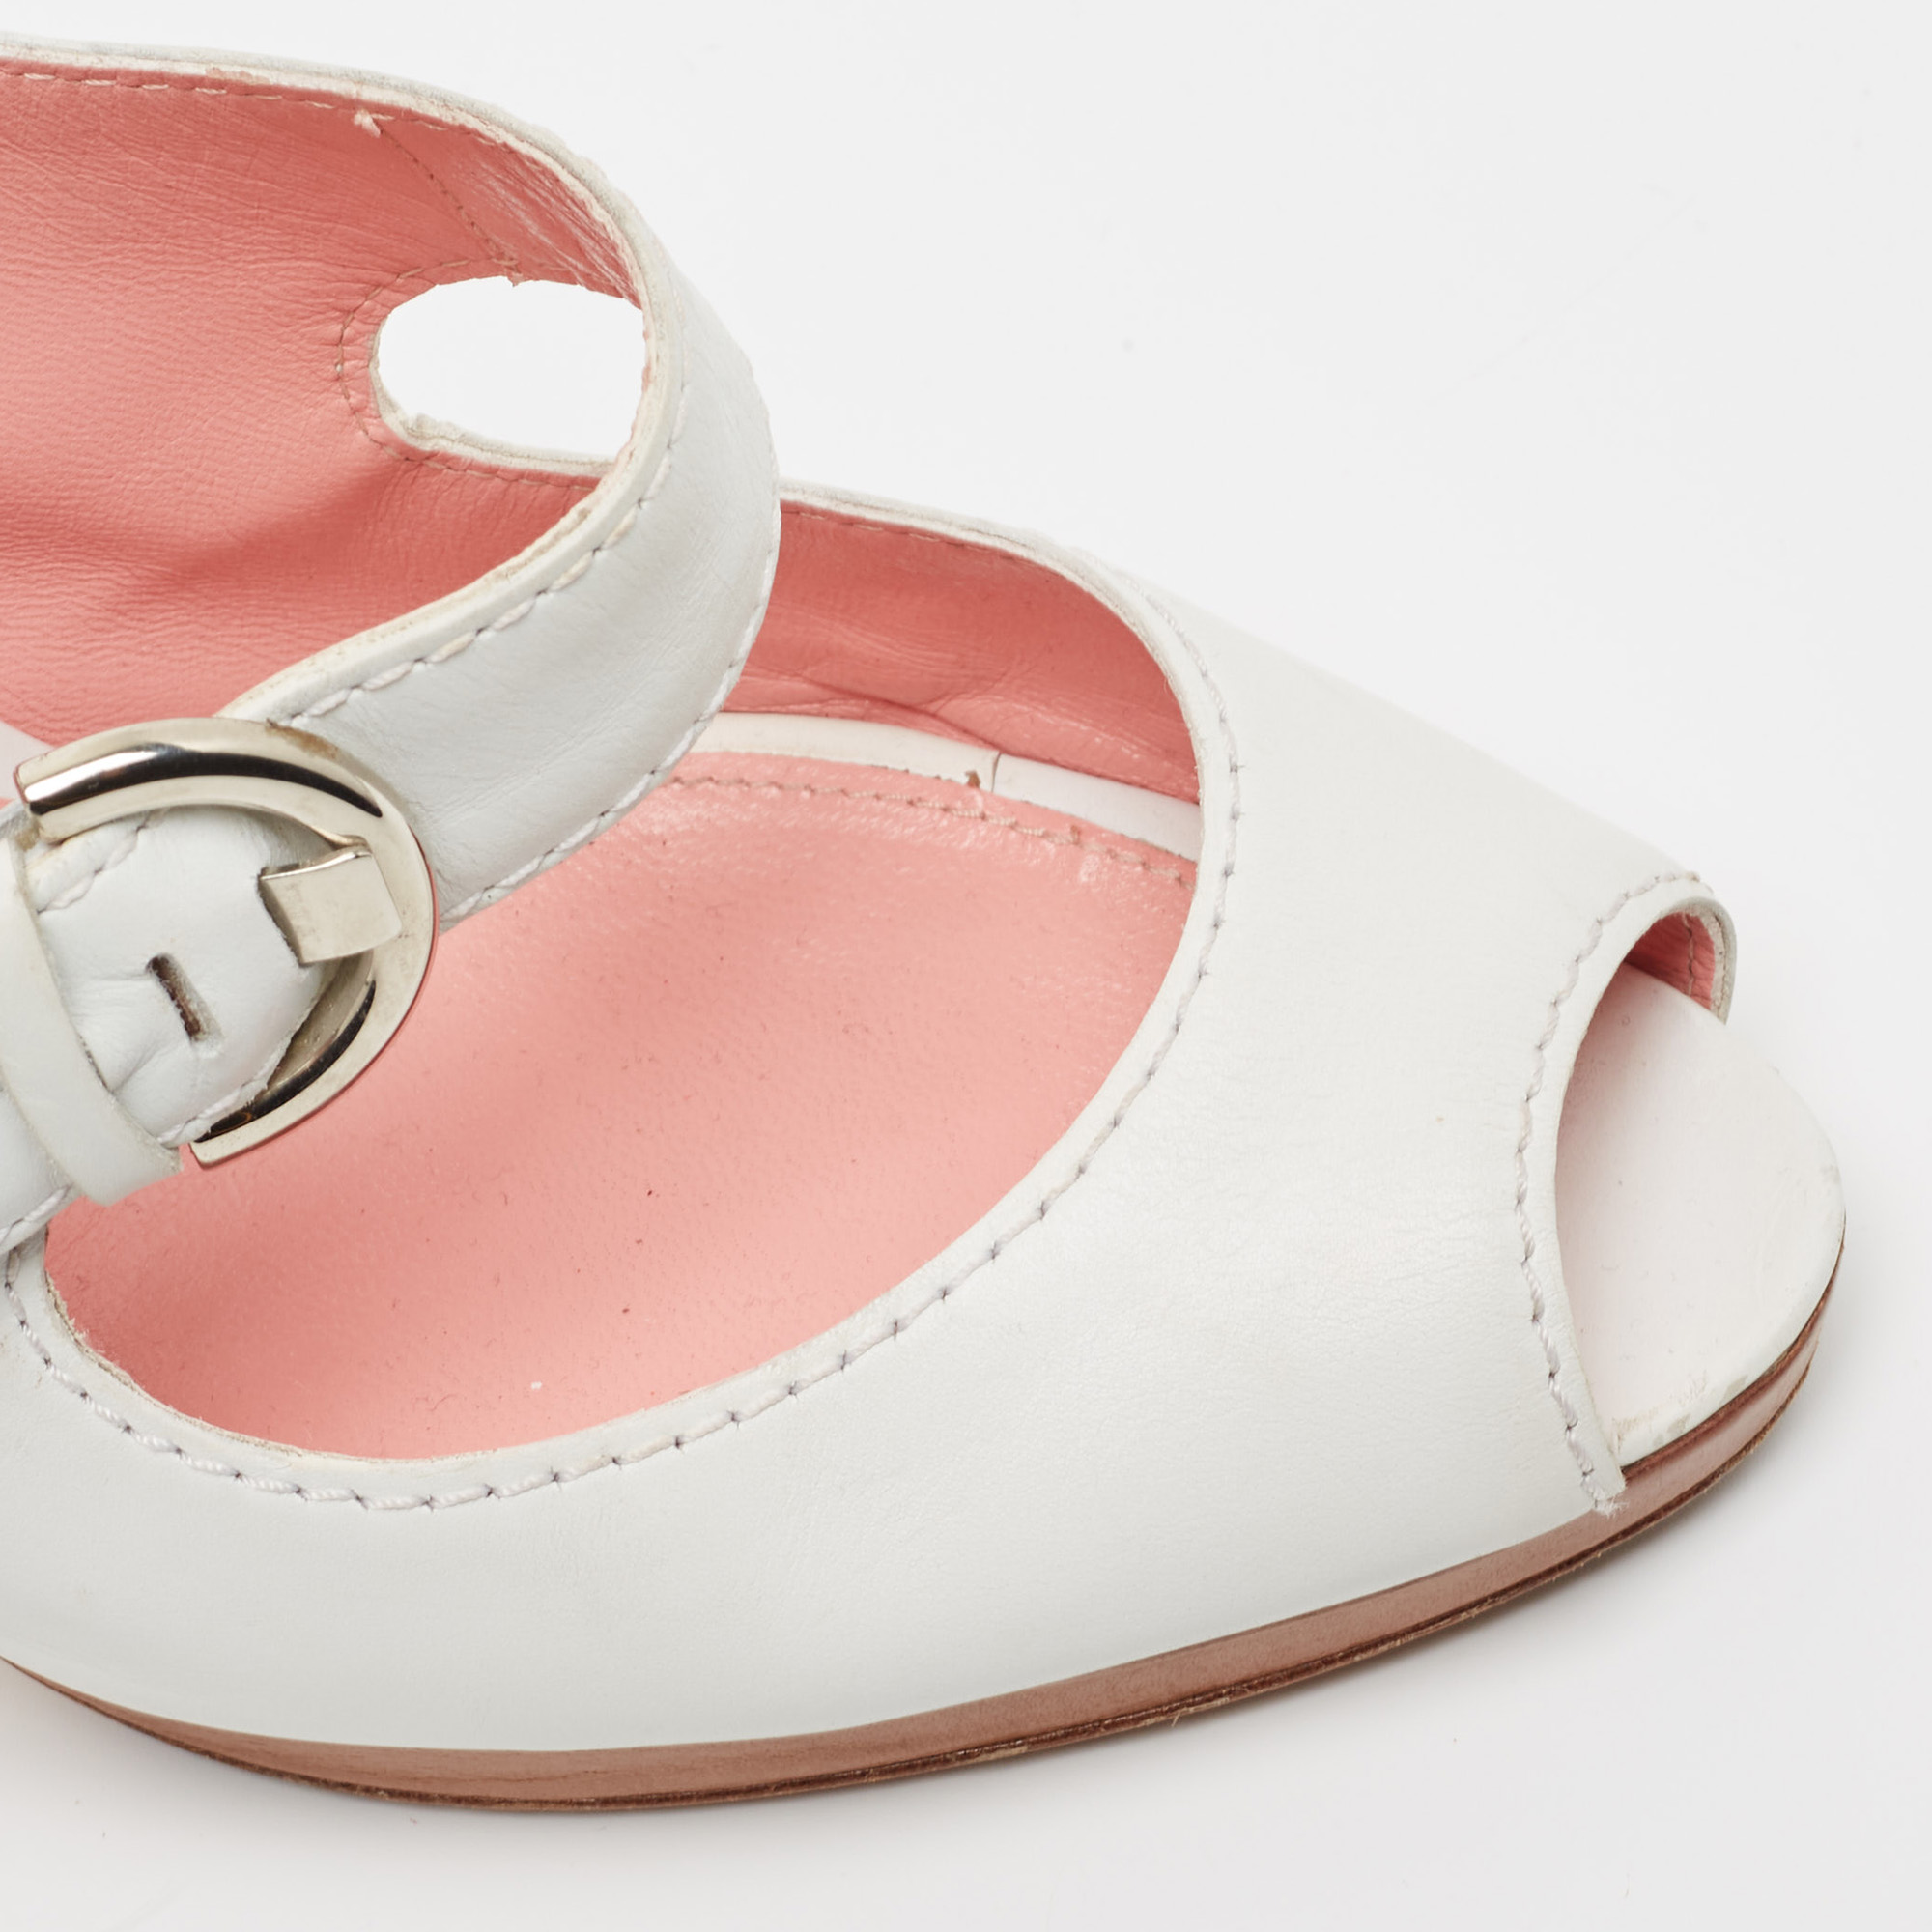 Sergio Rossi White Leather Peep Toe Slingback Sandals Size 40